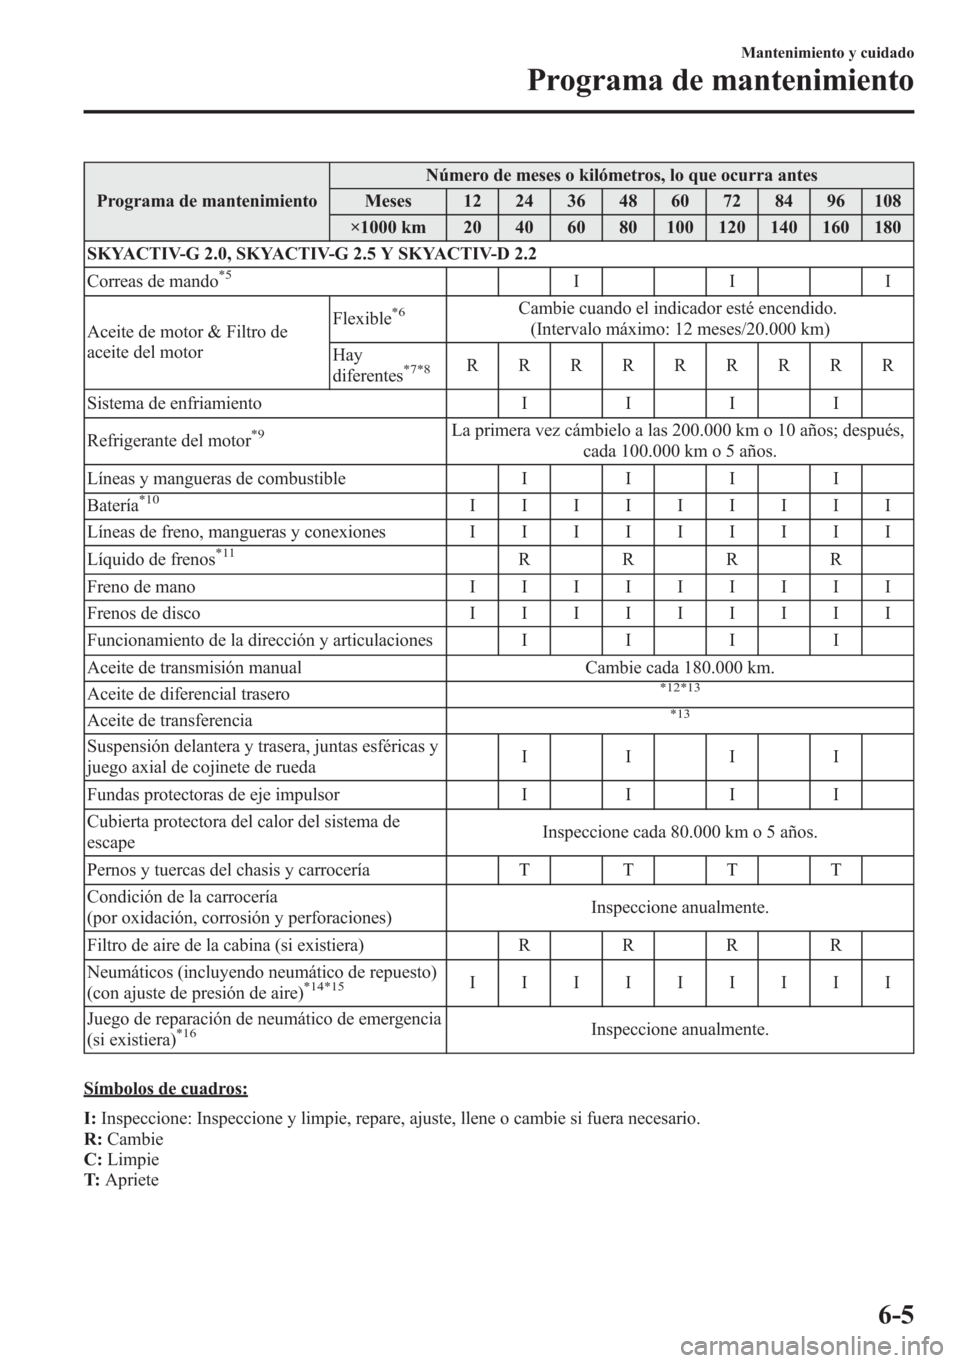 MAZDA MODEL 6 2015  Manual del propietario (in Spanish) Programa de mantenimientoNúmero de meses o kilómetros, lo que ocurra antes
Meses 12 24 36 48 60 72 84 96 108
×1000 km 20 40 60 80 100 120 140 160 180
SKYACTIV-G 2.0, SKYACTIV-G 2.5 Y SKYACTIV-D 2.2